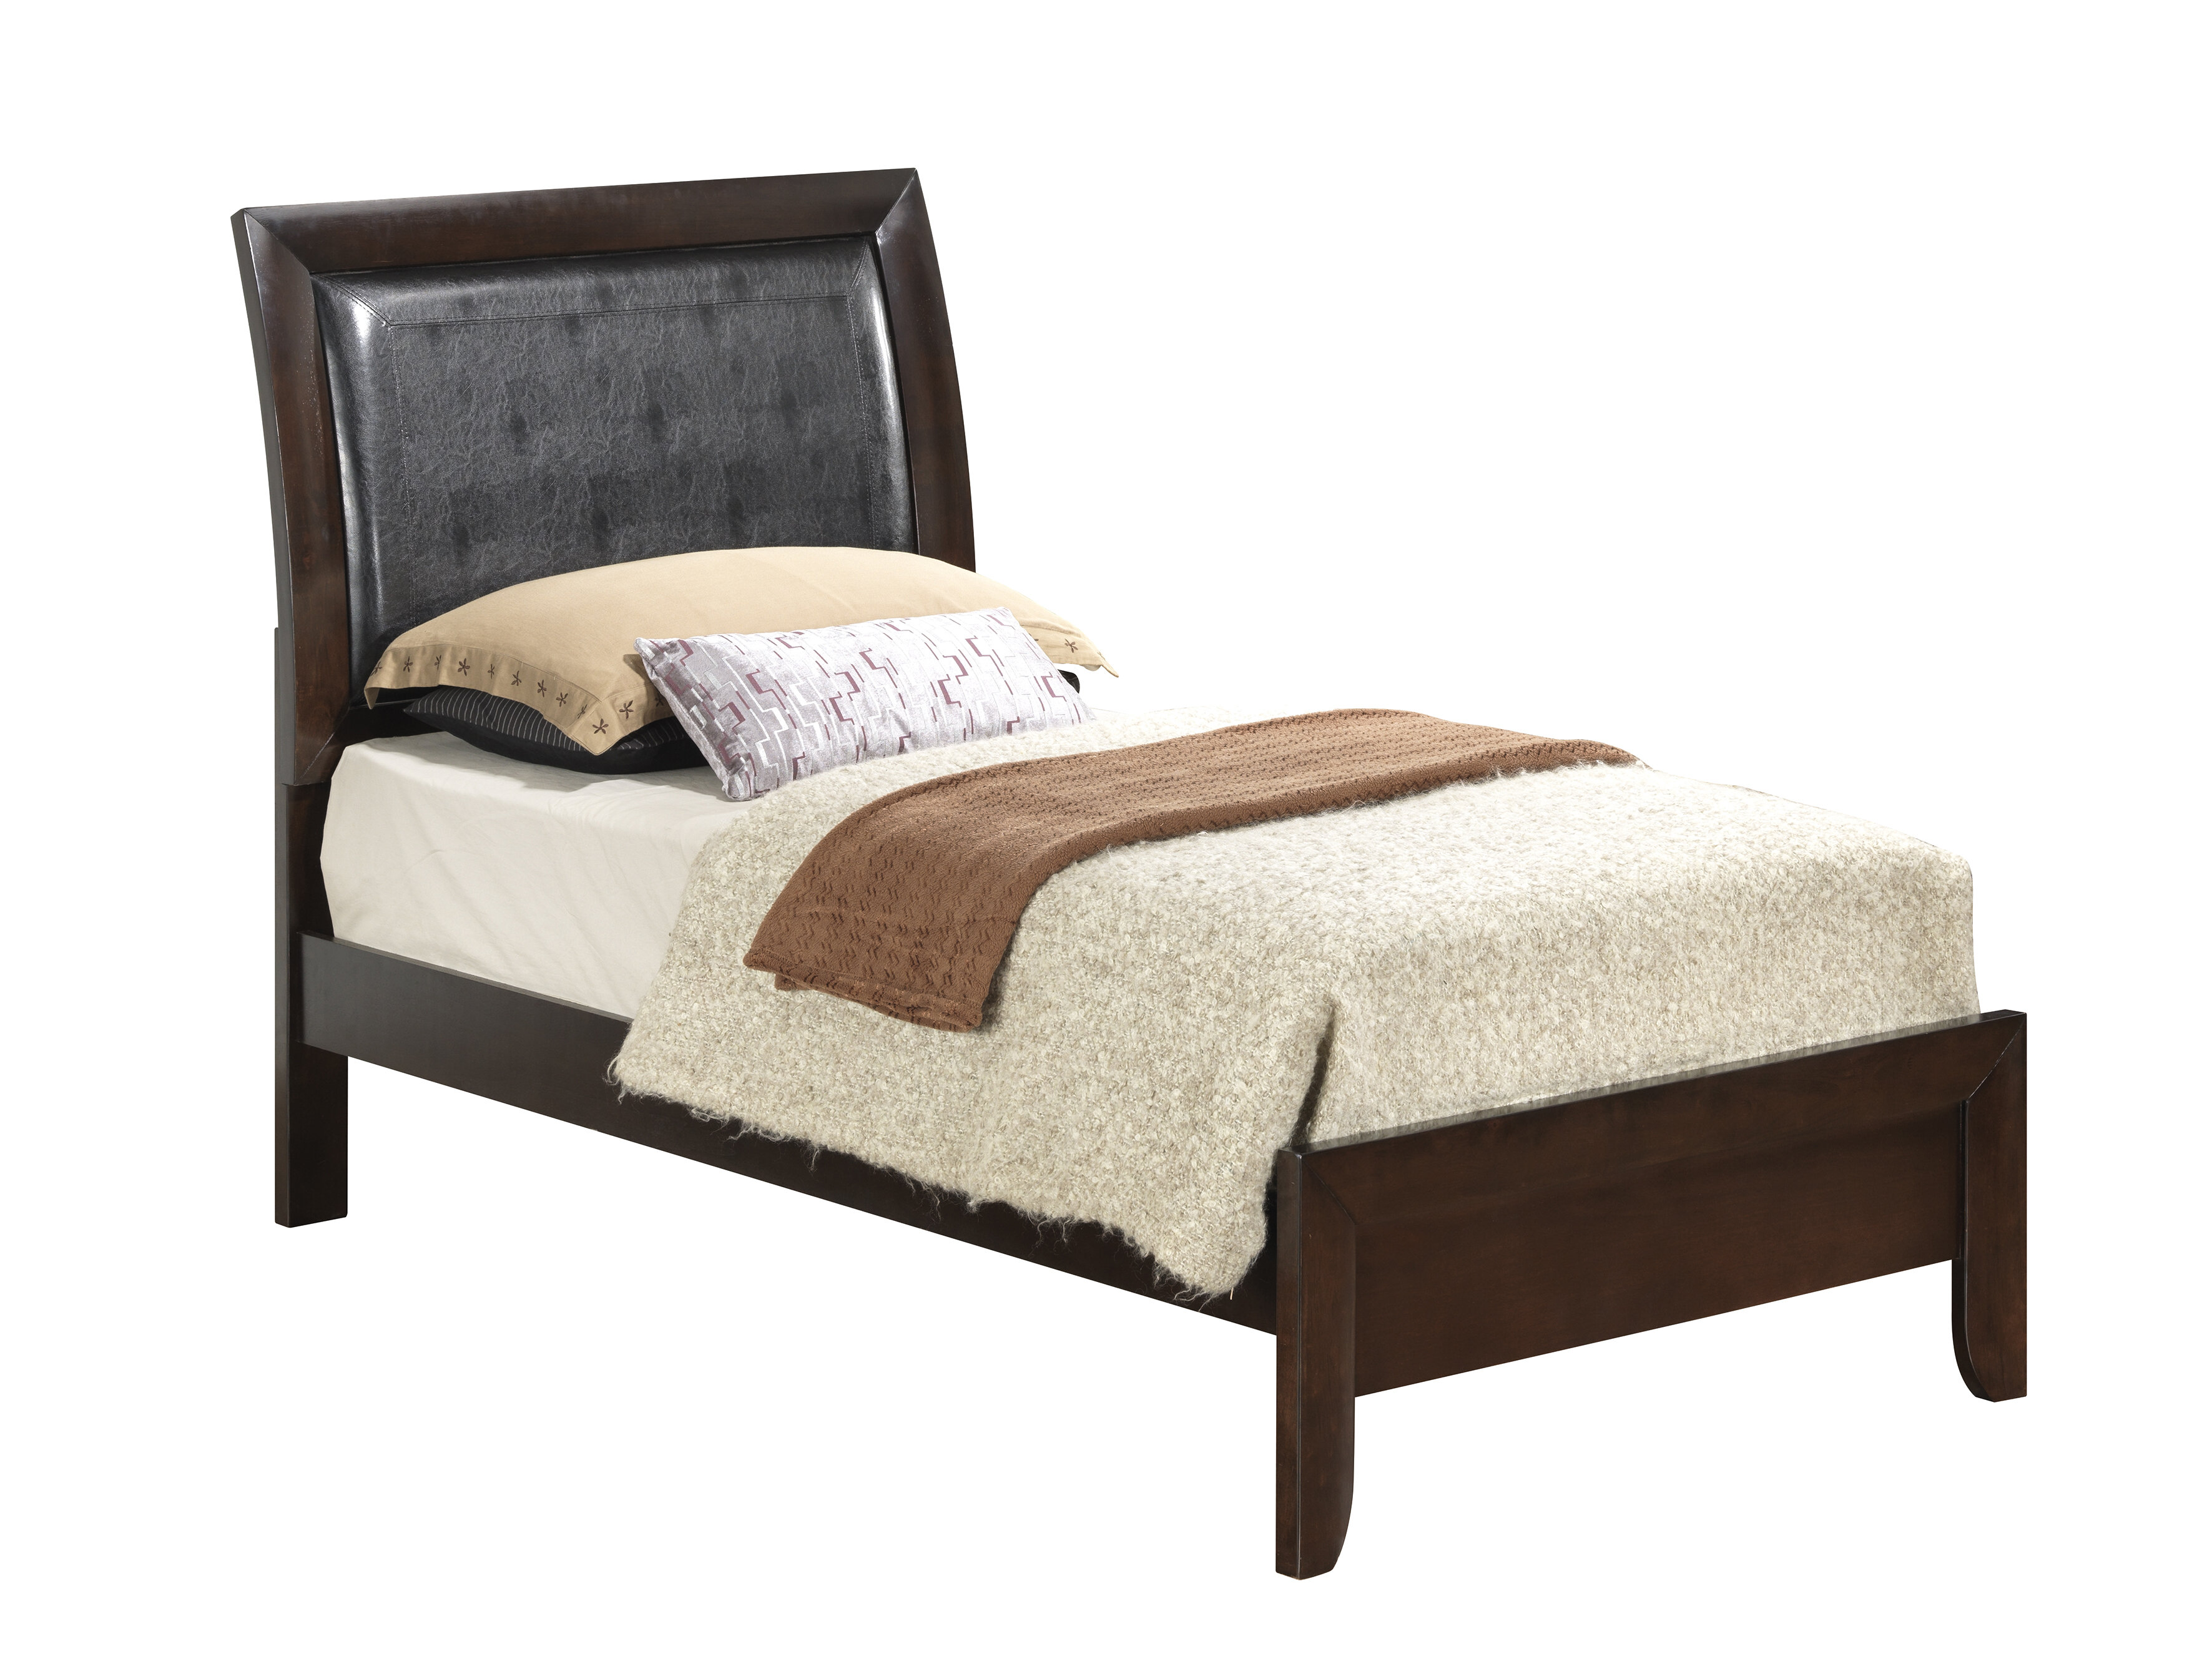 Latitude Run Medford Upholstered Standard Bed Reviews Wayfair